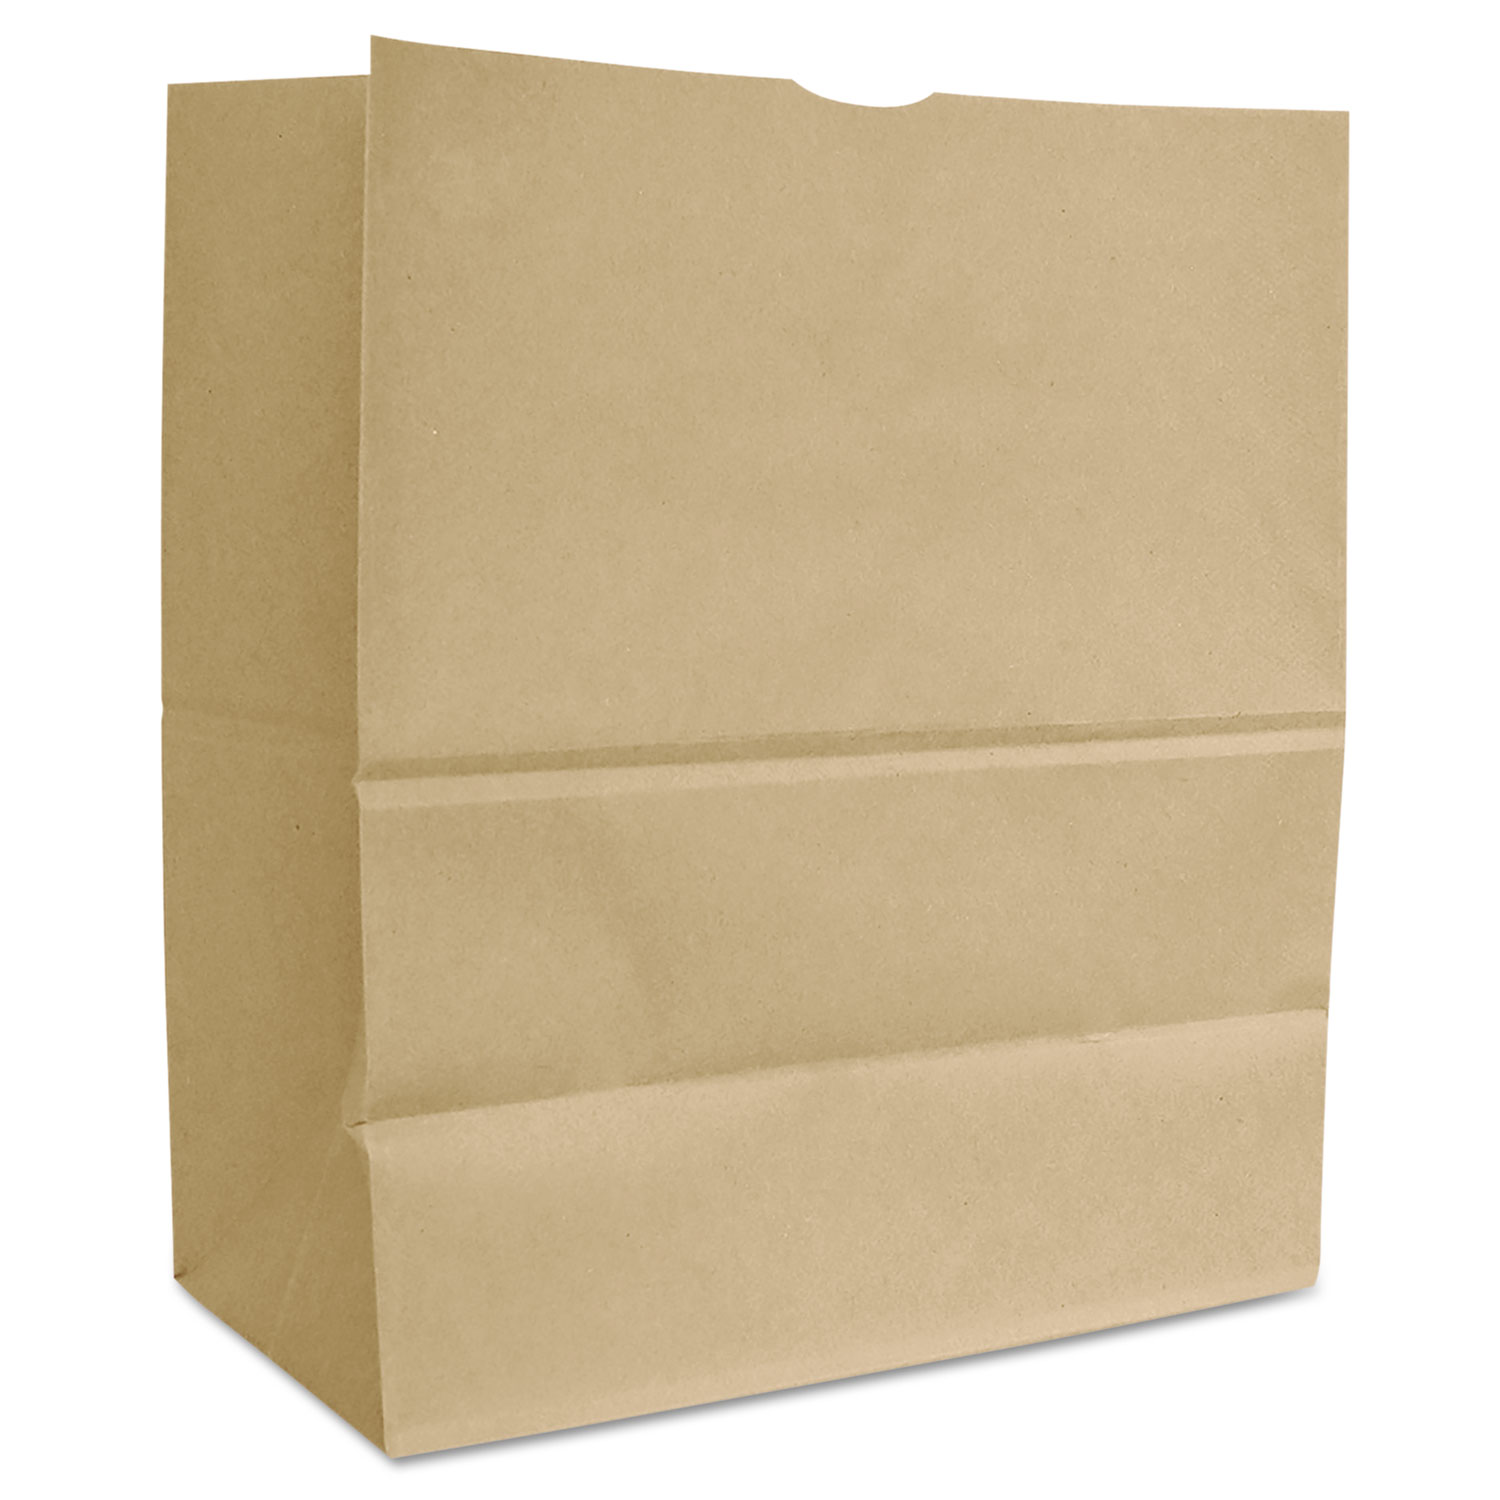  General 80078 Grocery Paper Bags, 66 lbs Capacity, 1/6 BBL, 12w x 7d x 17h, Kraft, 500 Bags (BAGSK1665) 